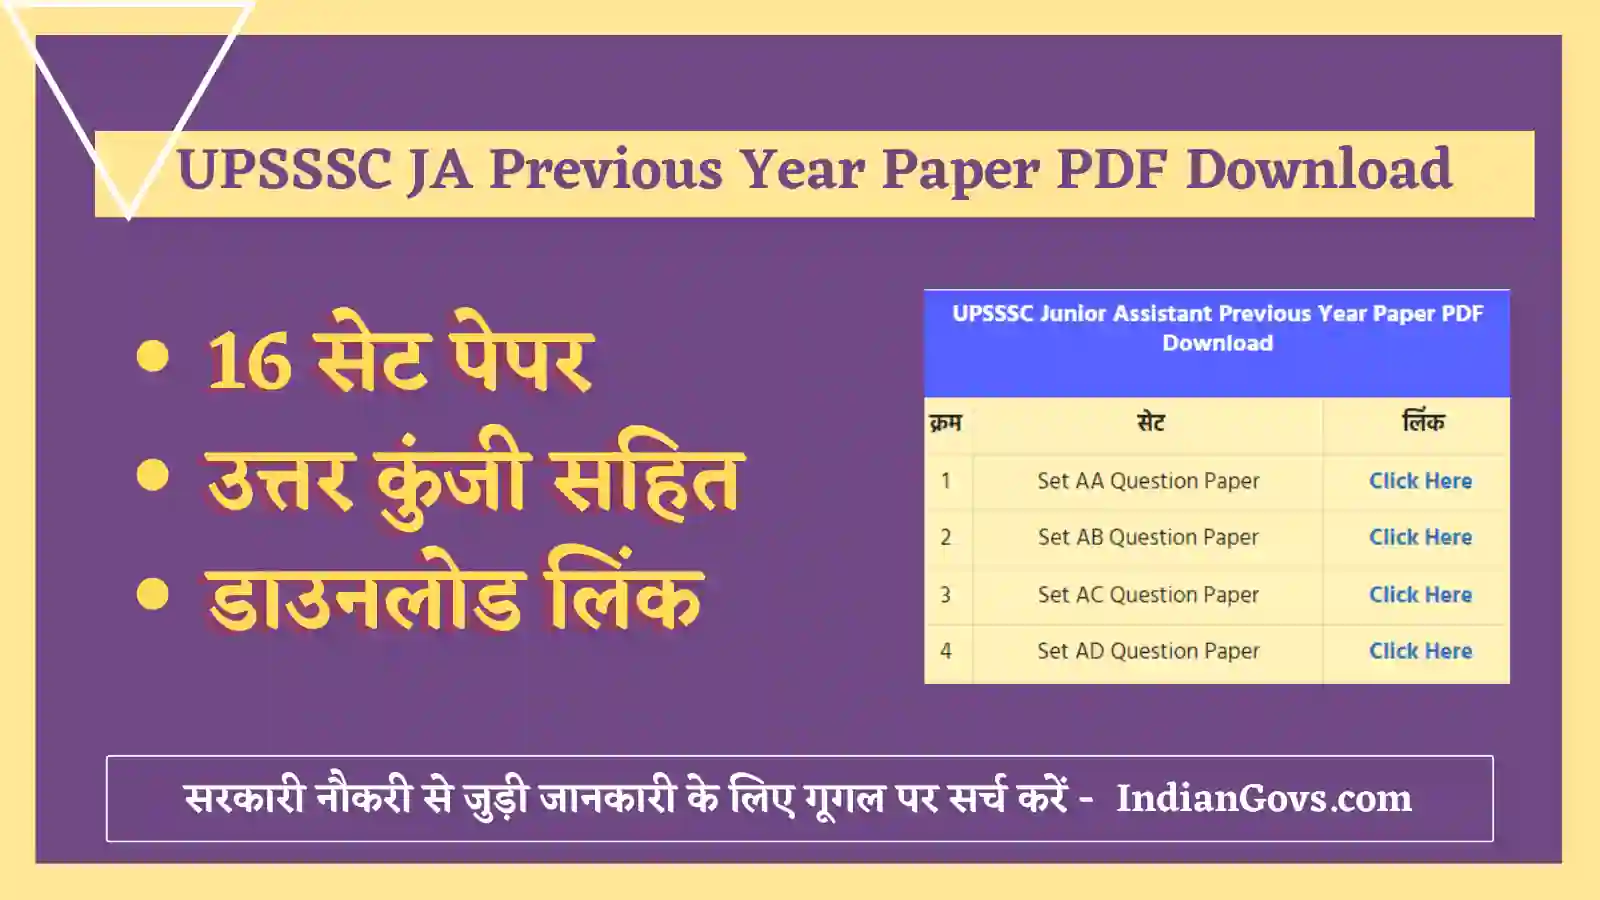 UPSSSC Junior Assistant Previous Year Paper PDF Download